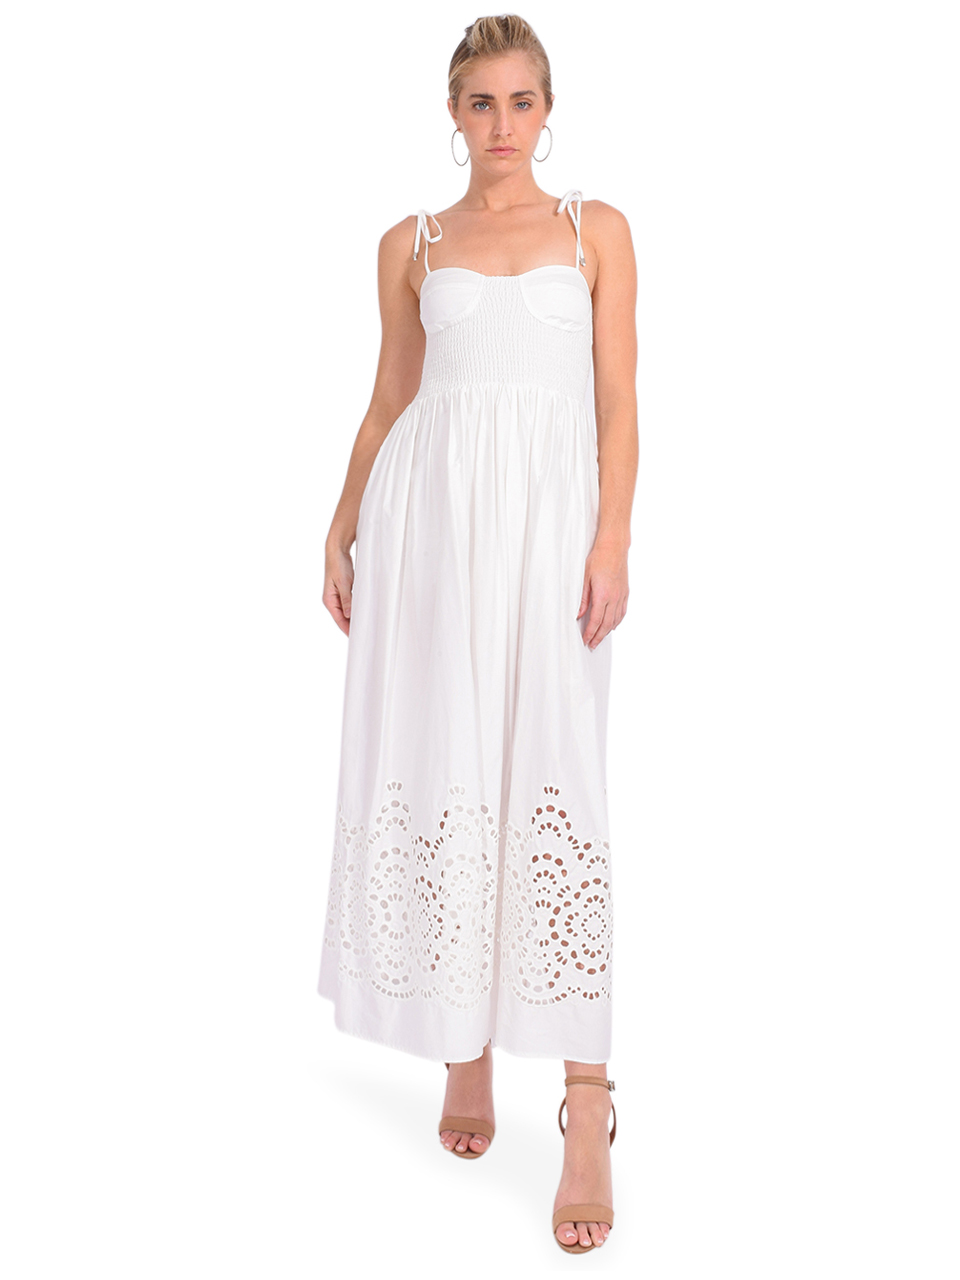 KARINA GRIMALDI Josephine Midi Dress in White Front View 1